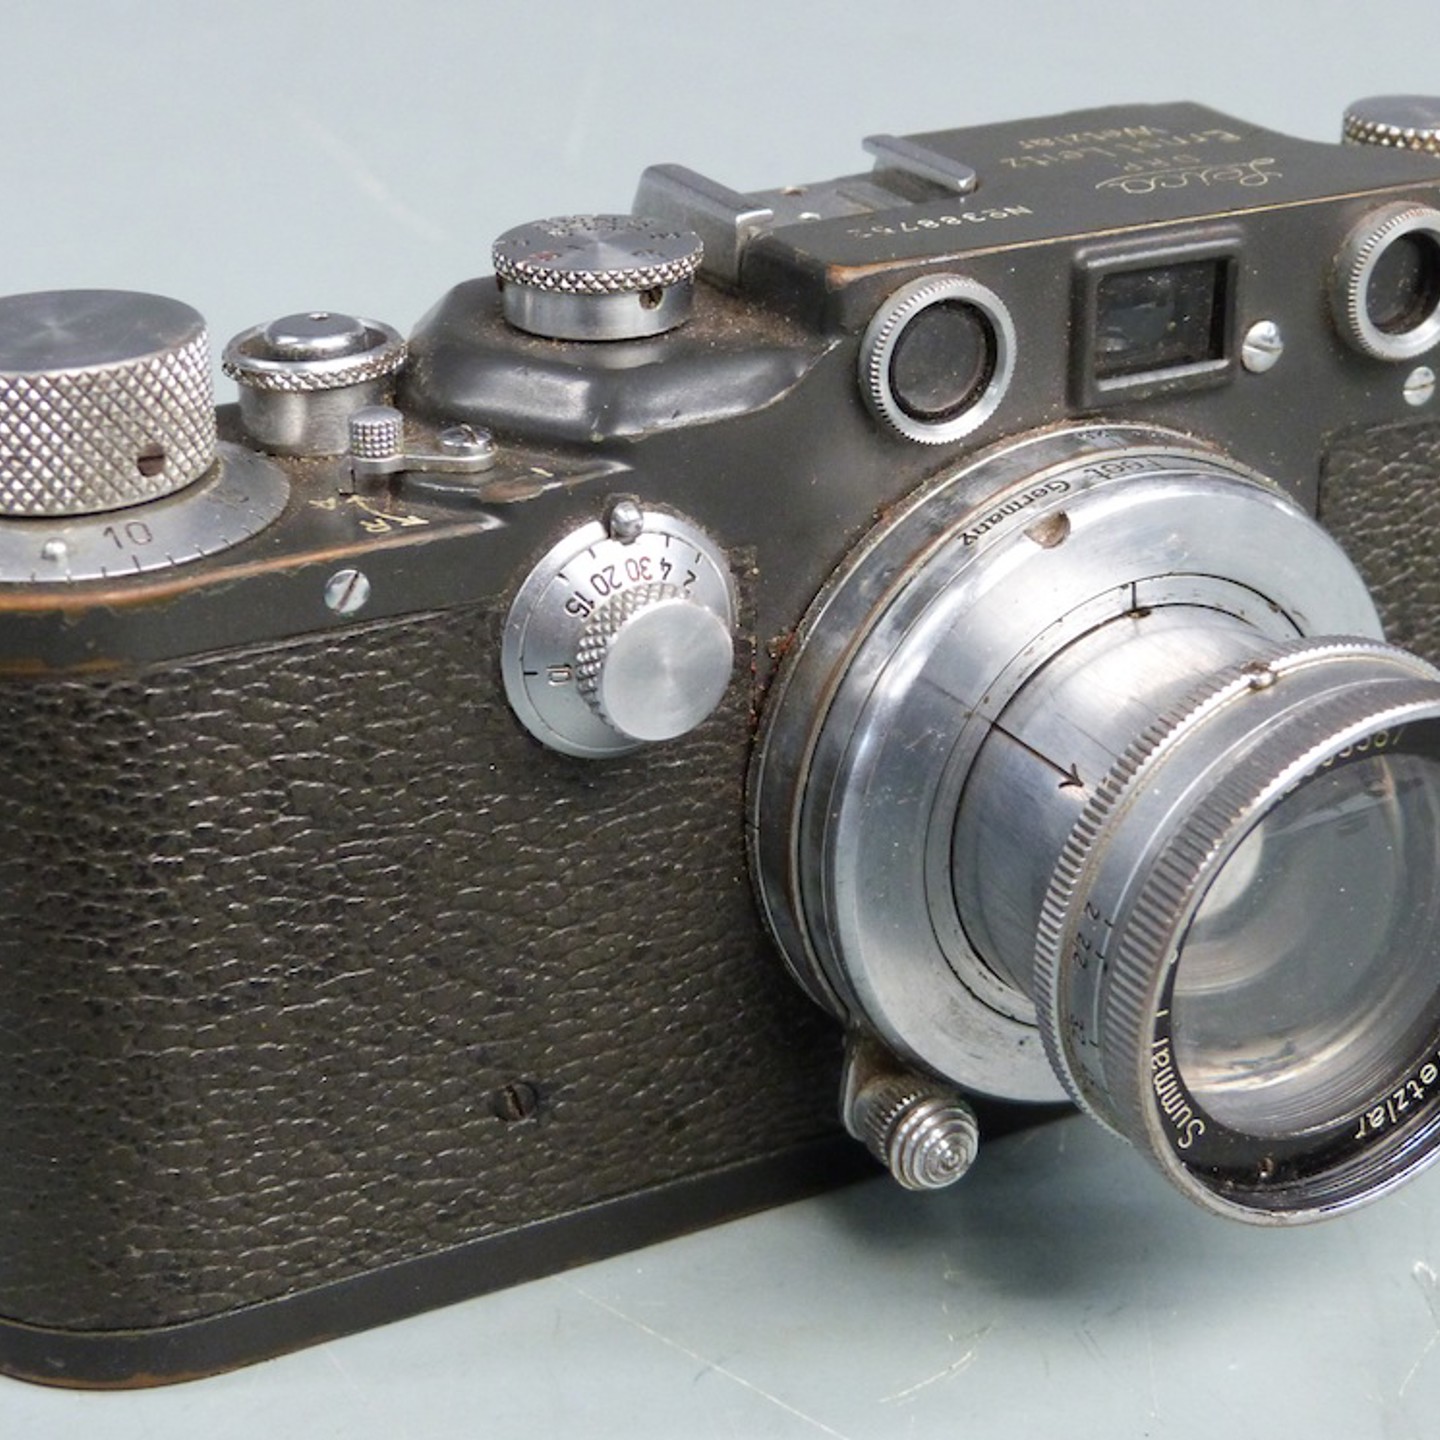 WW2 German Military, Luftwaffe Or Similar Leica Iiic 35Mm Rangefinder Camera Sold For £850